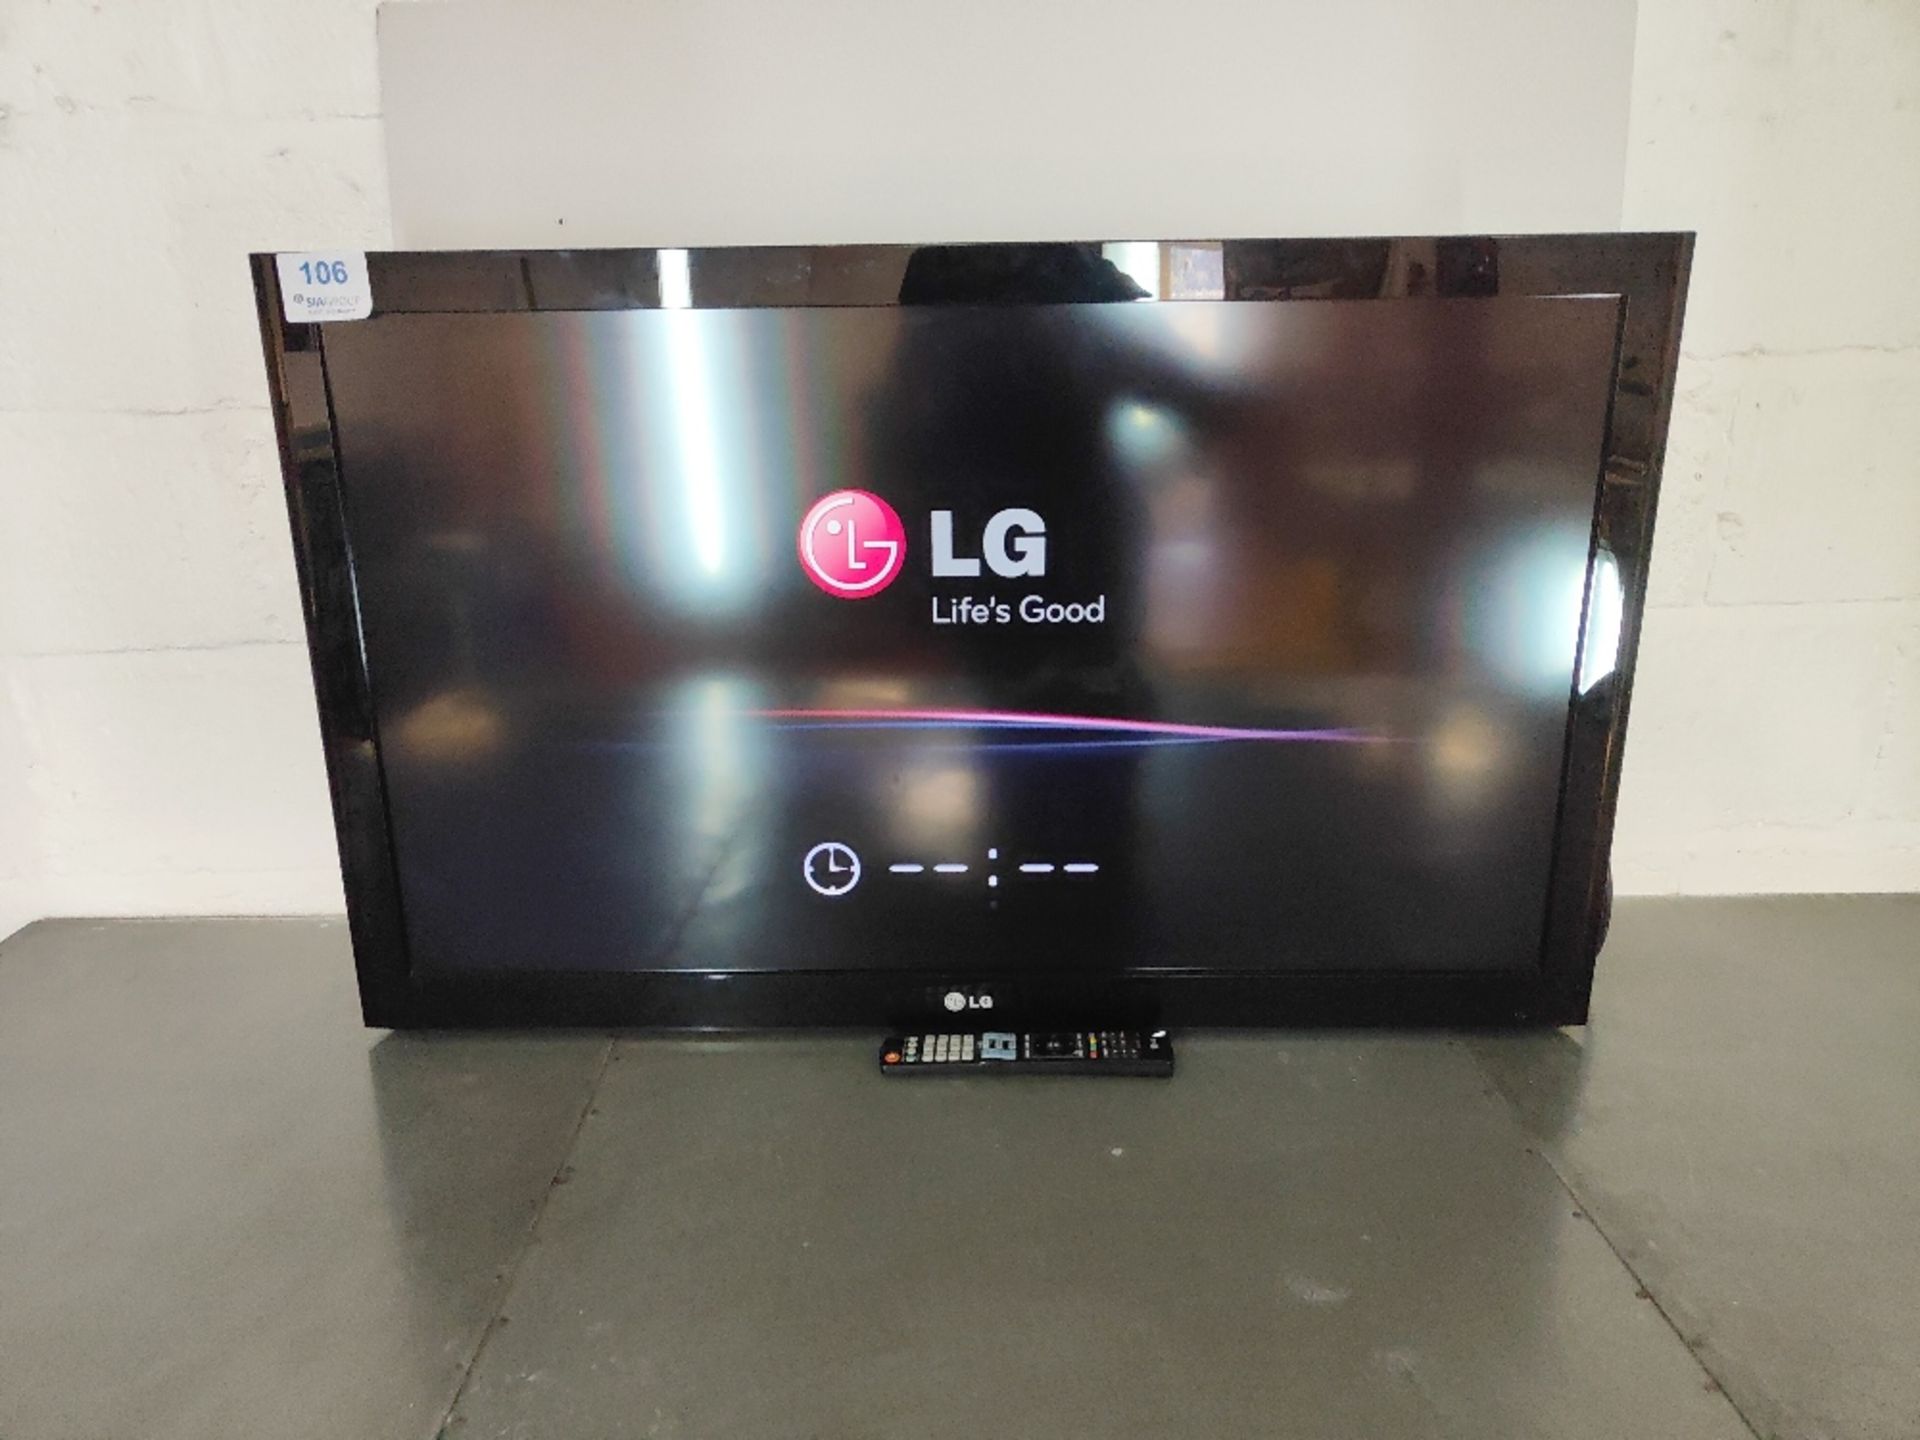 LG 42" 42LD550-ZC flat screen television